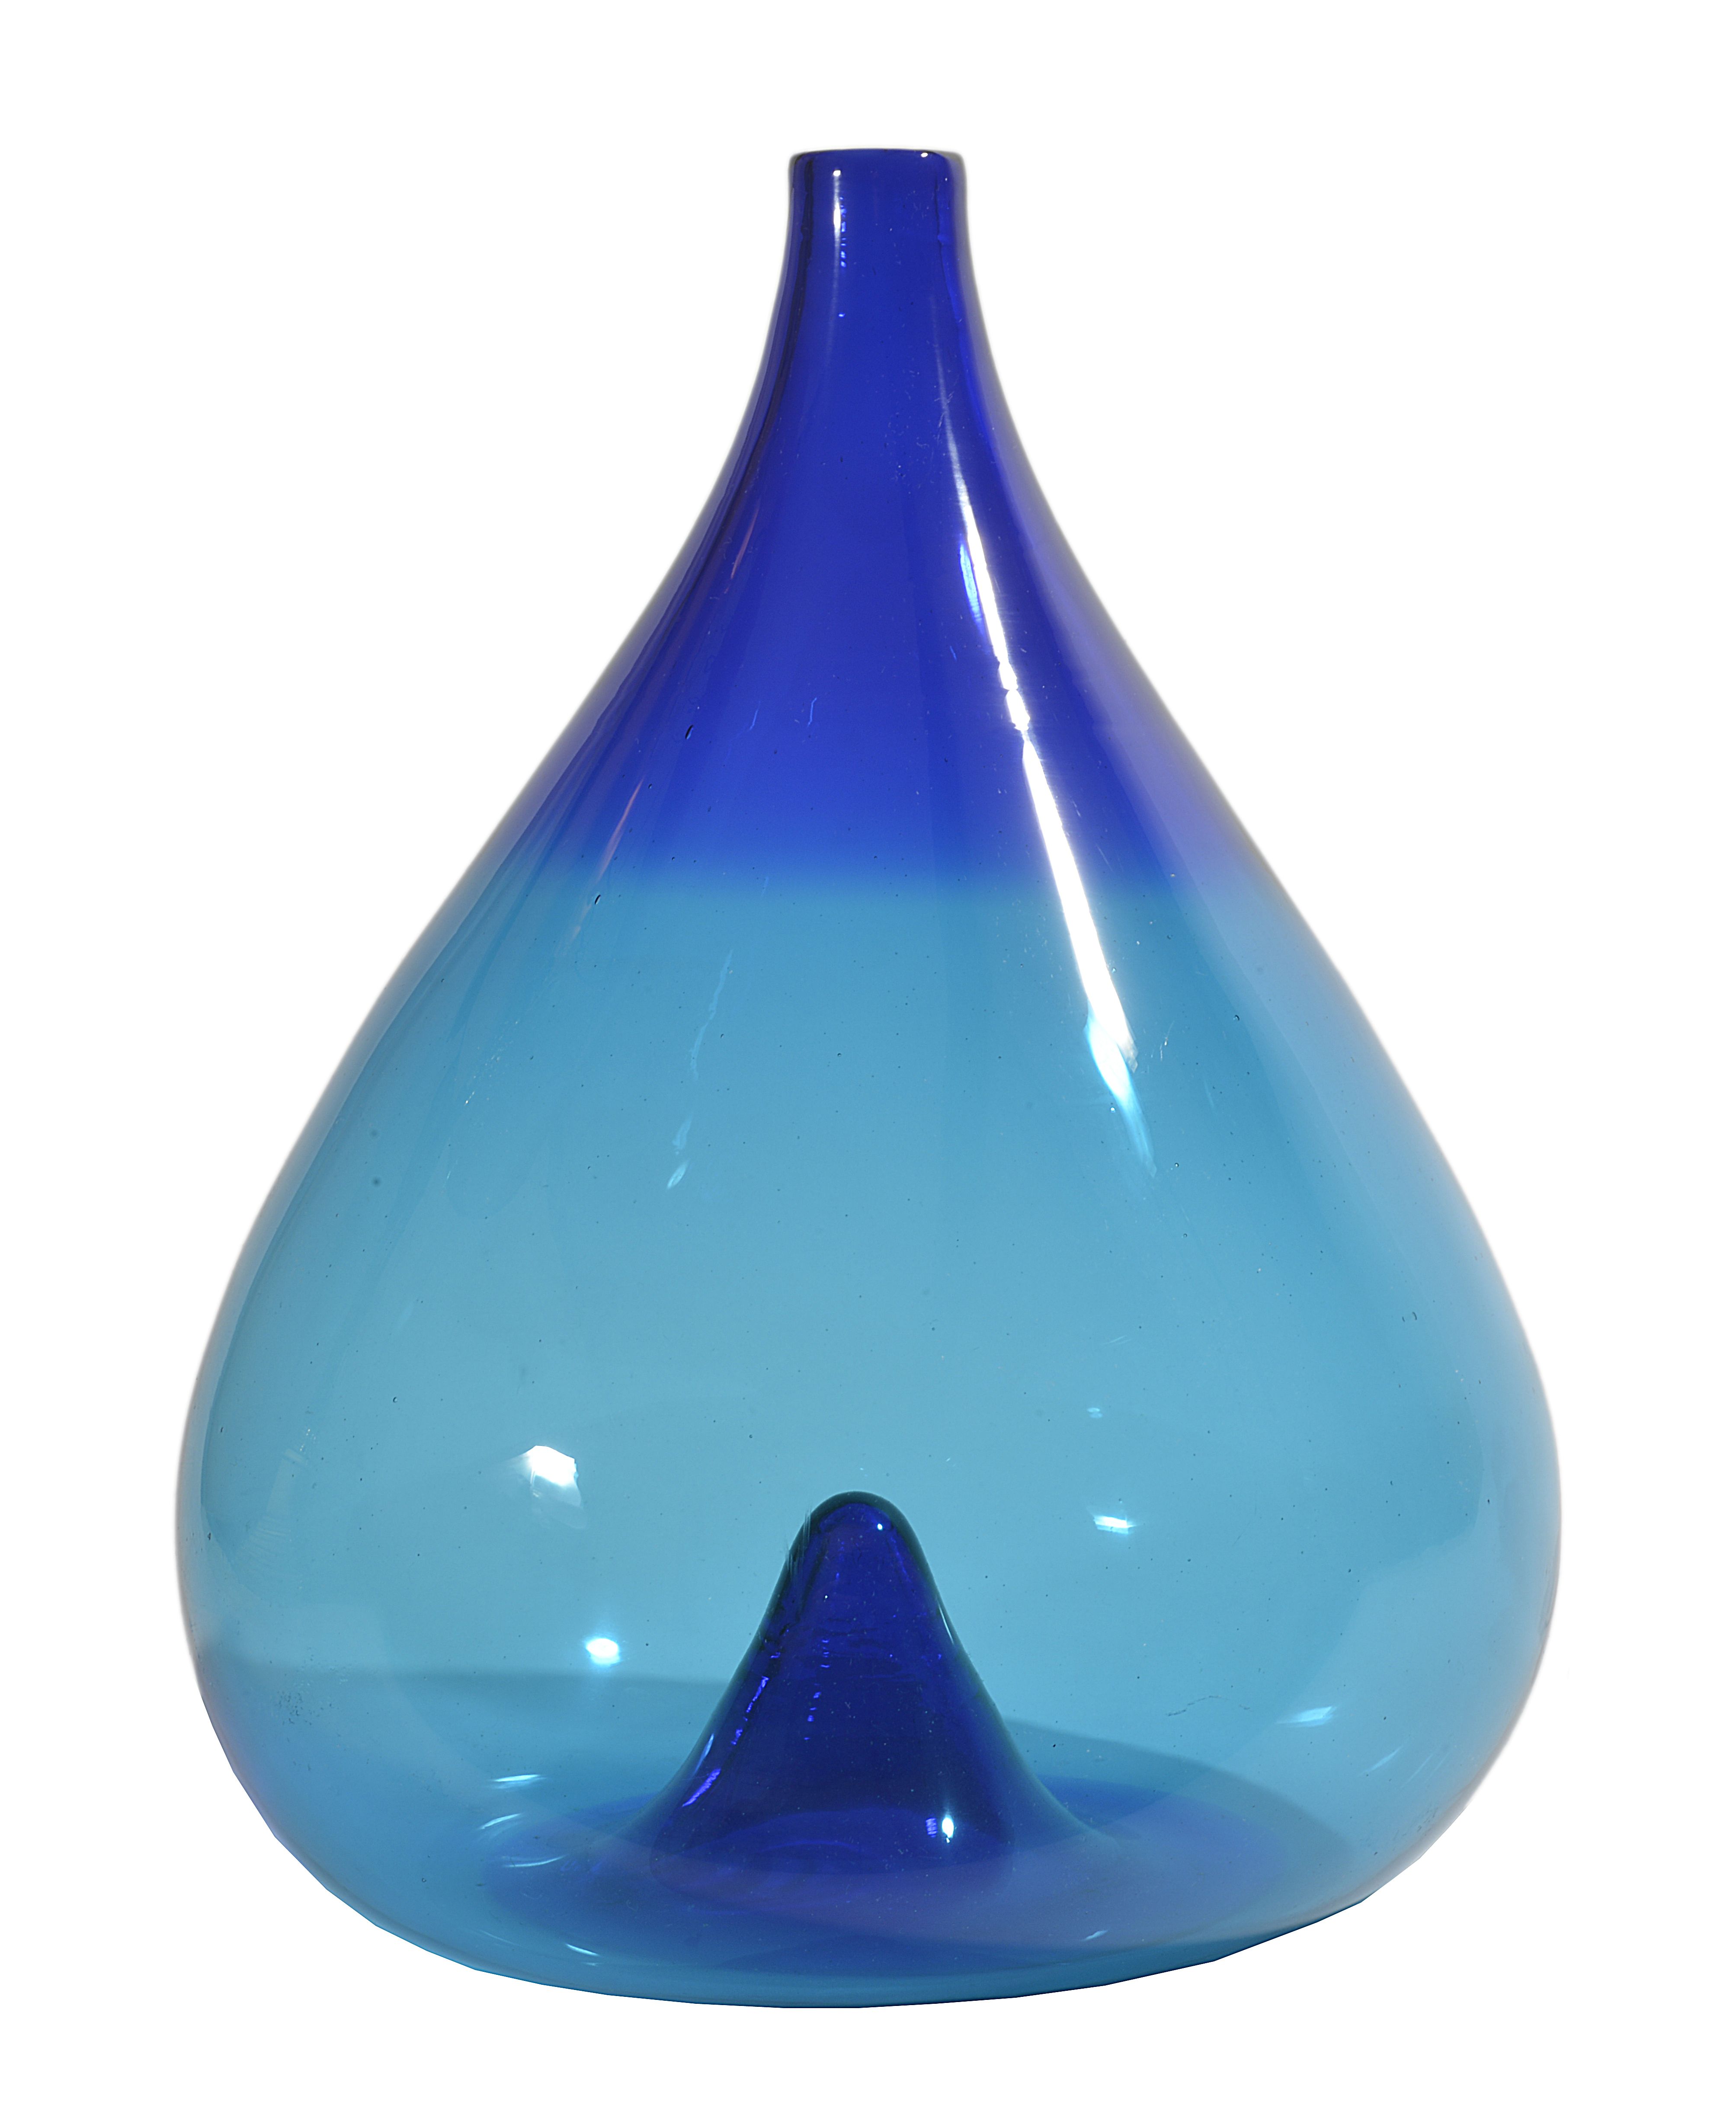 Toni Zuccheri (b.1937) for Venini
'Crepuscoli series'
two tone blue vase, incalmo technique, without